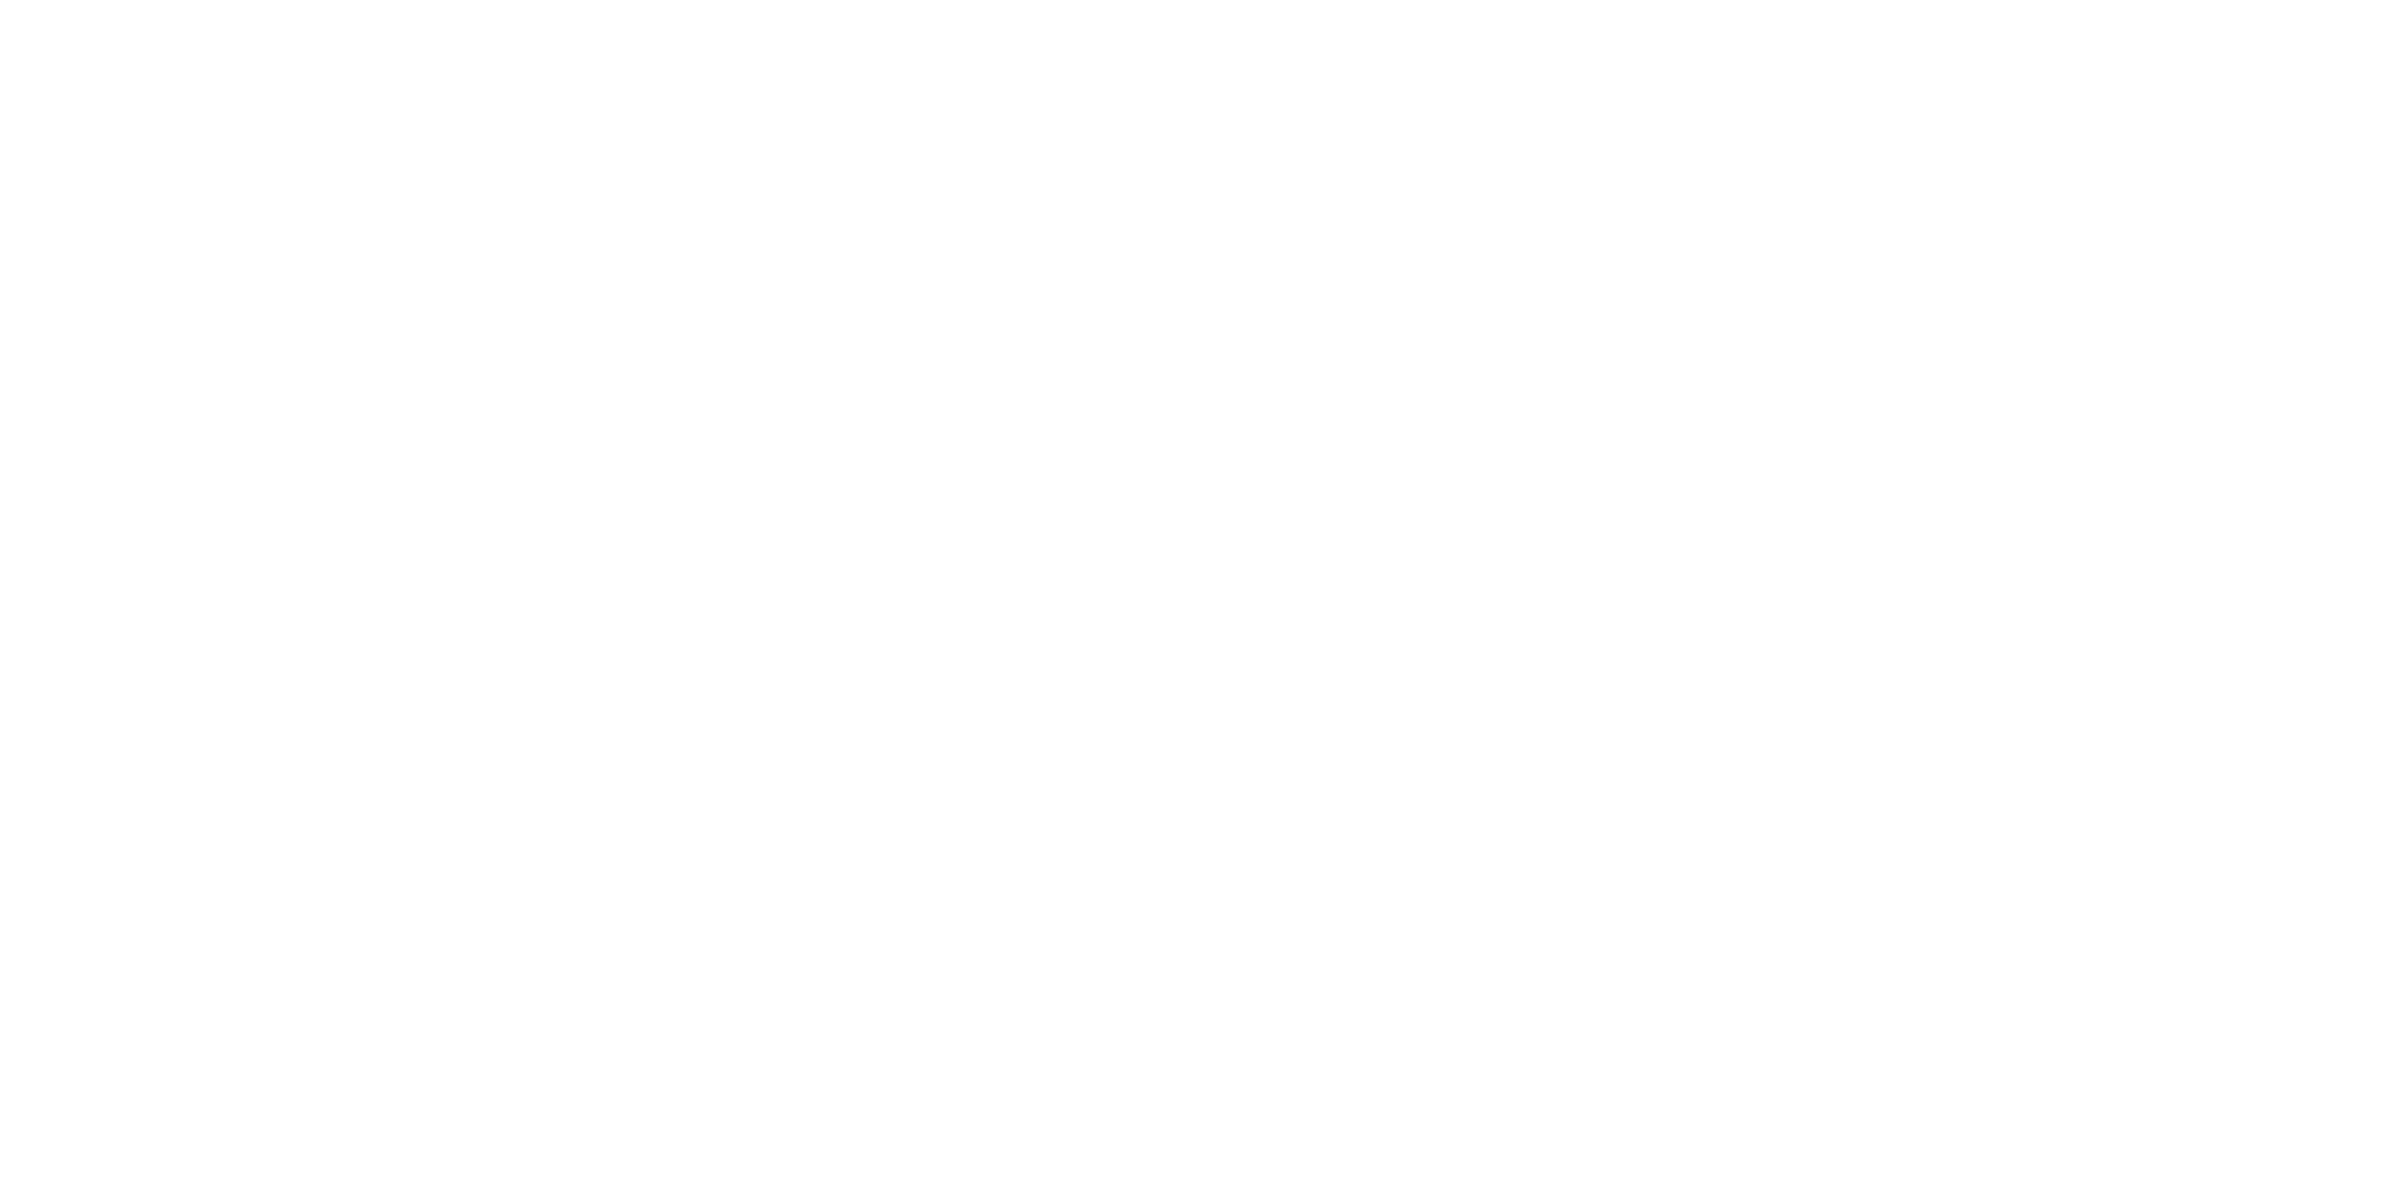 Christopher Herzog photographe